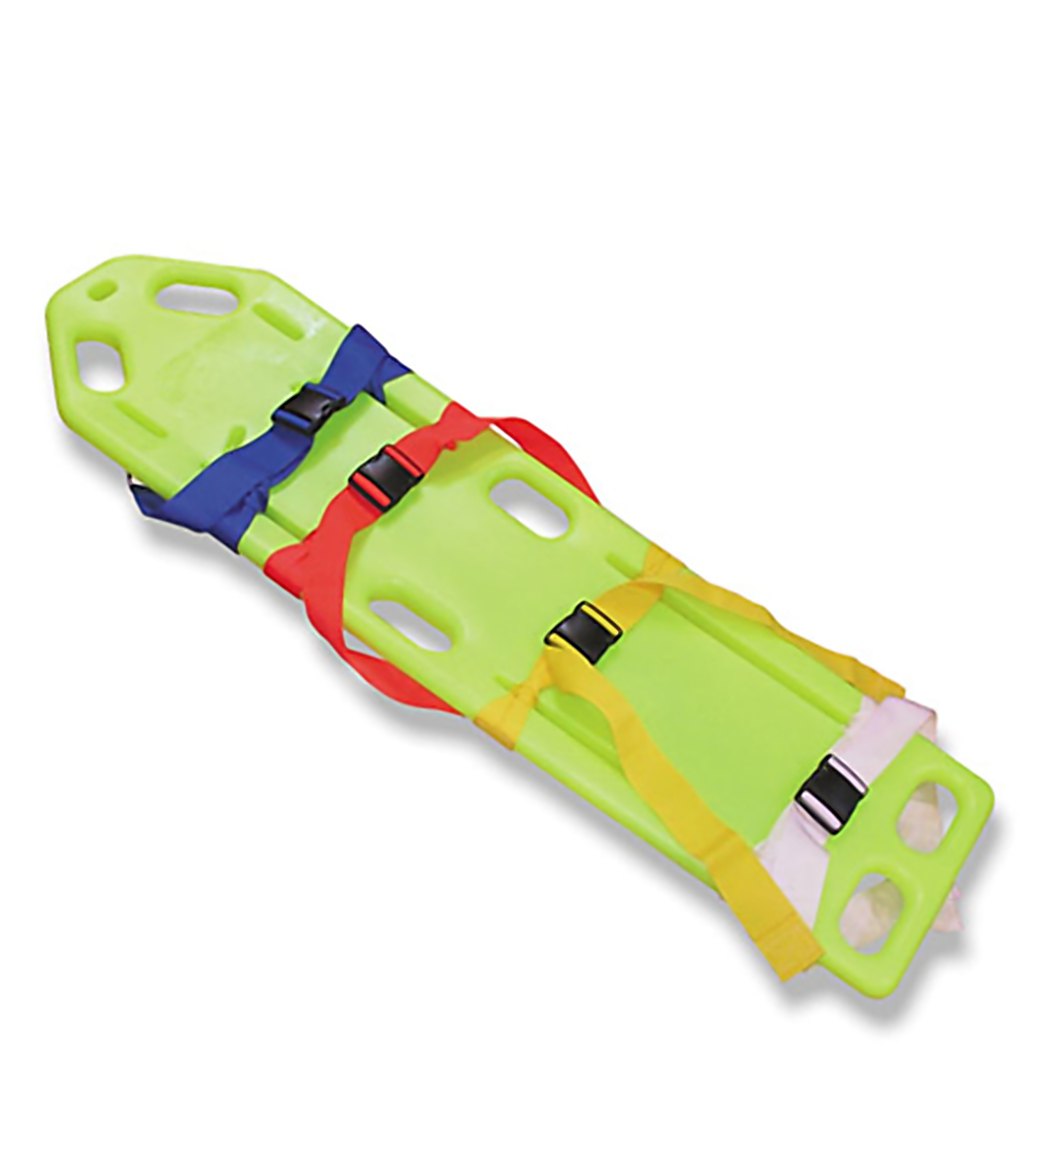 PEDI-LITE Lifeguard Spineboard Kit